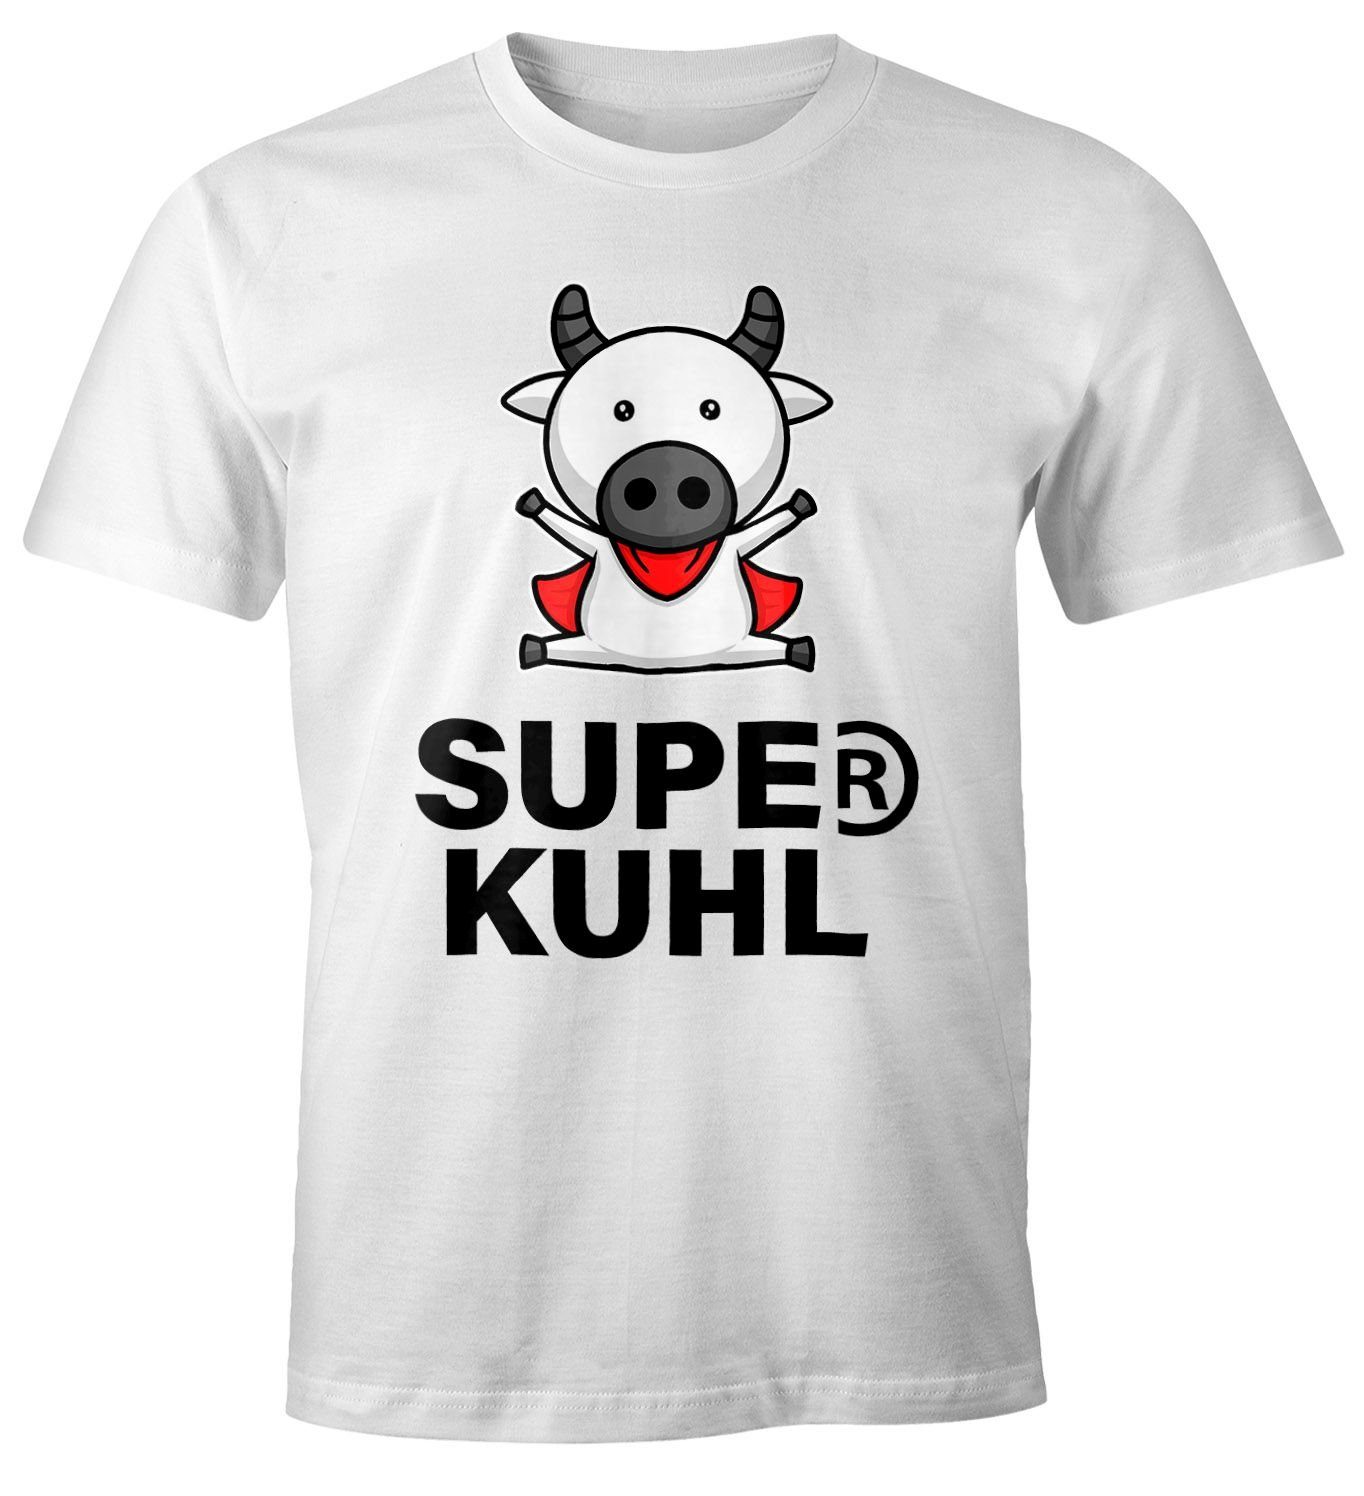 MoonWorks Print-Shirt Lustiges Herren T-Shirt Tier-Motiv Super Kuhl Kuh Fun-Shirt Moonworks® mit Print weiß